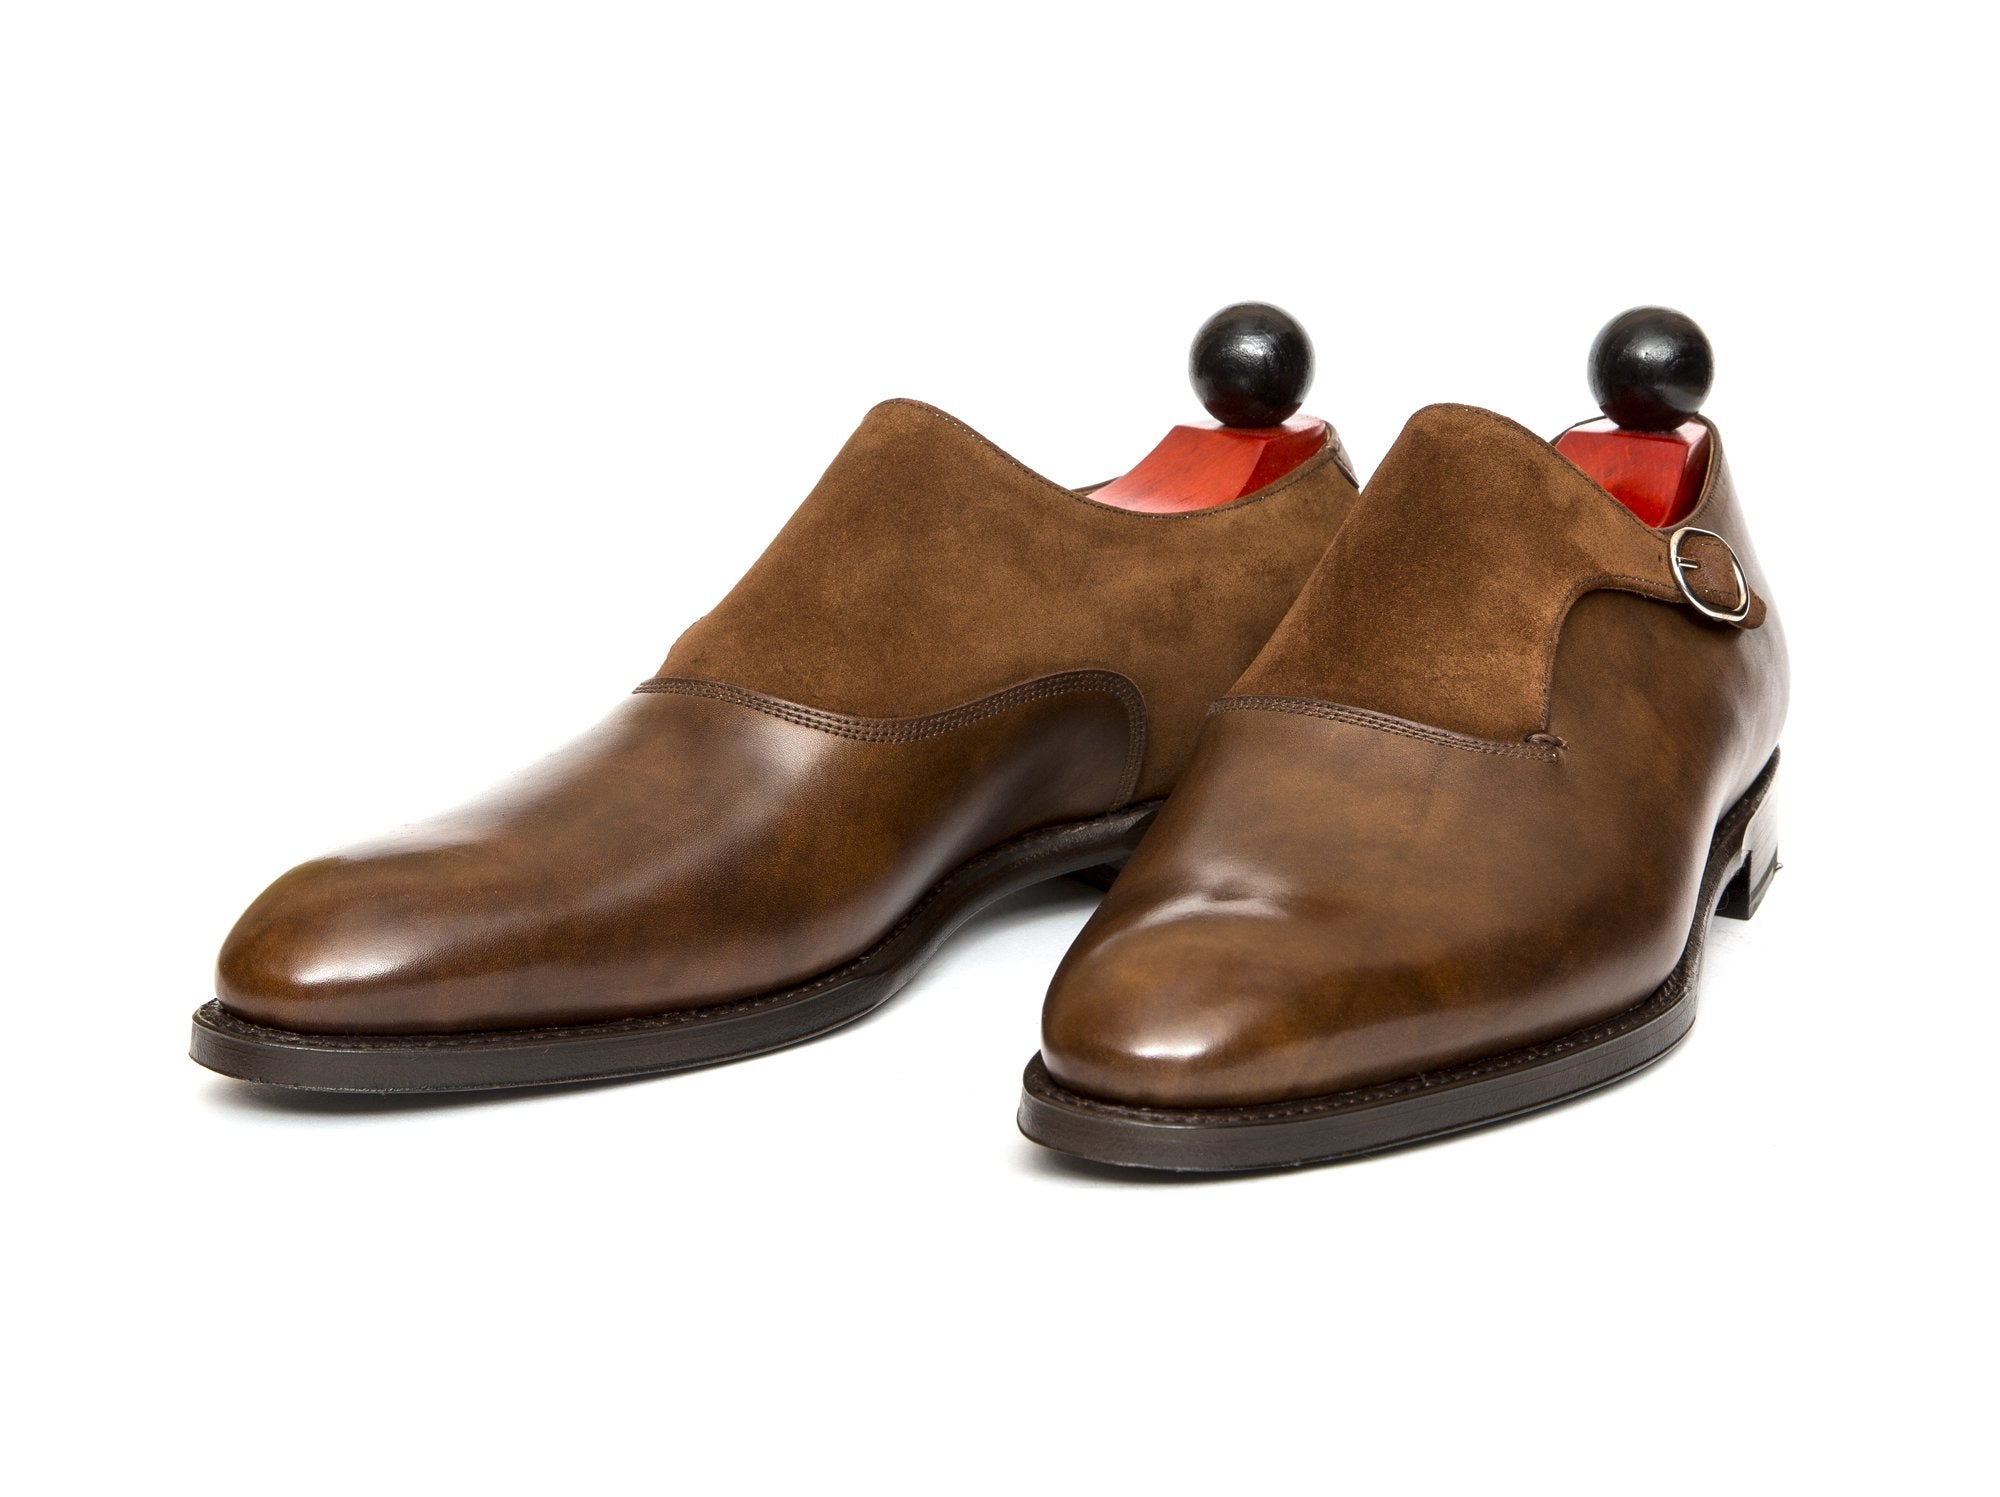 J.FitzPatrick Footwear - Madrona - Copper Museum Calf / Snuff Suede - NGT Last